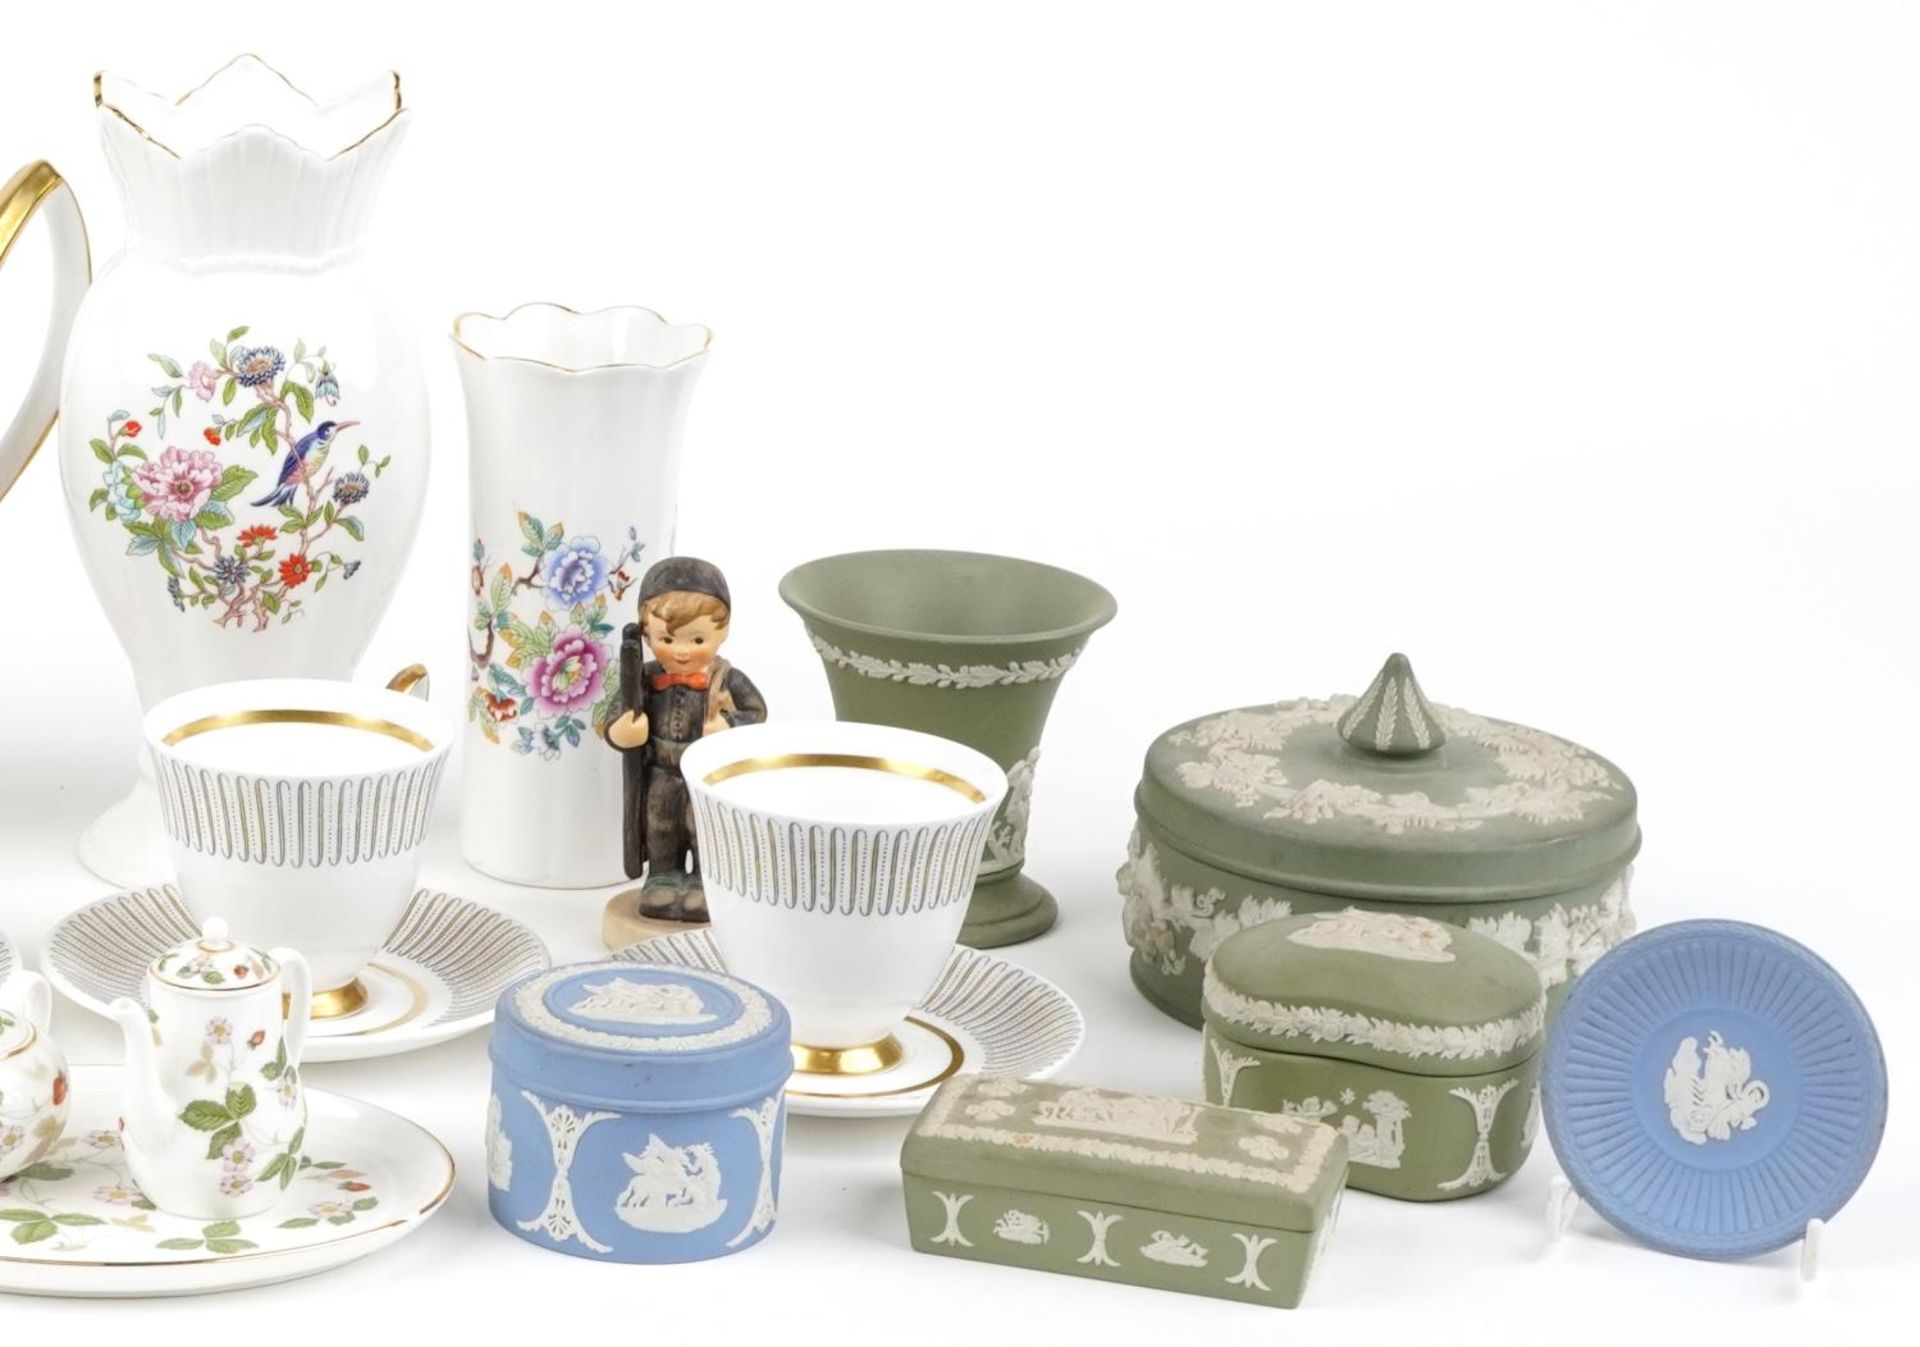 Collectable china including Royal Albert Capri teaware, Wedgwood Jasperware, Wedgwood Clio and - Image 3 of 3